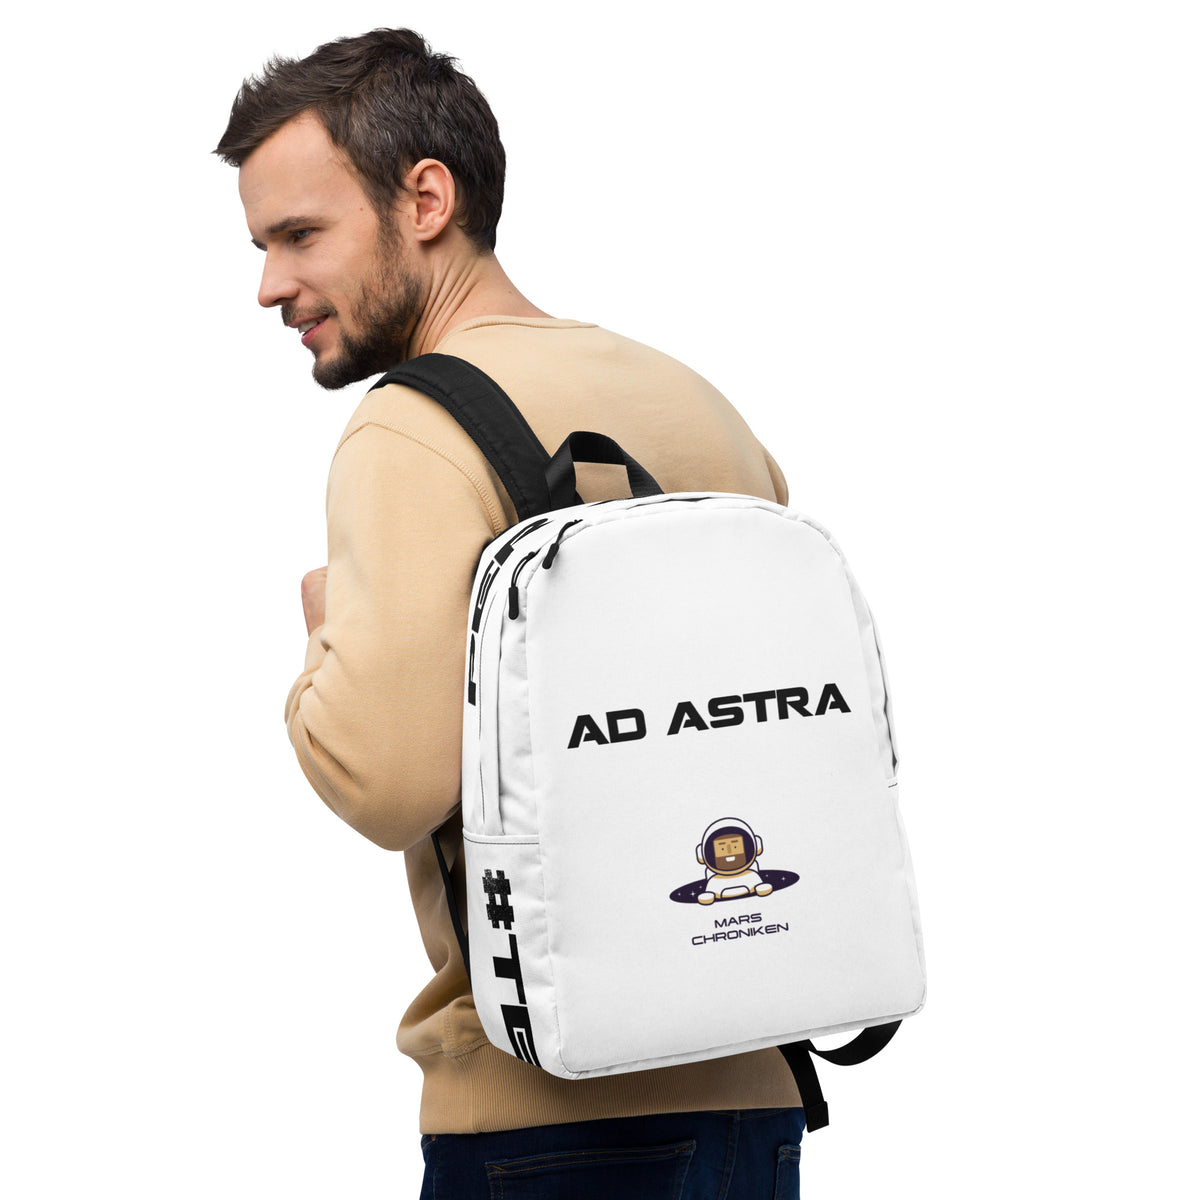 Mars Chroniken - Ad Astra Backpack